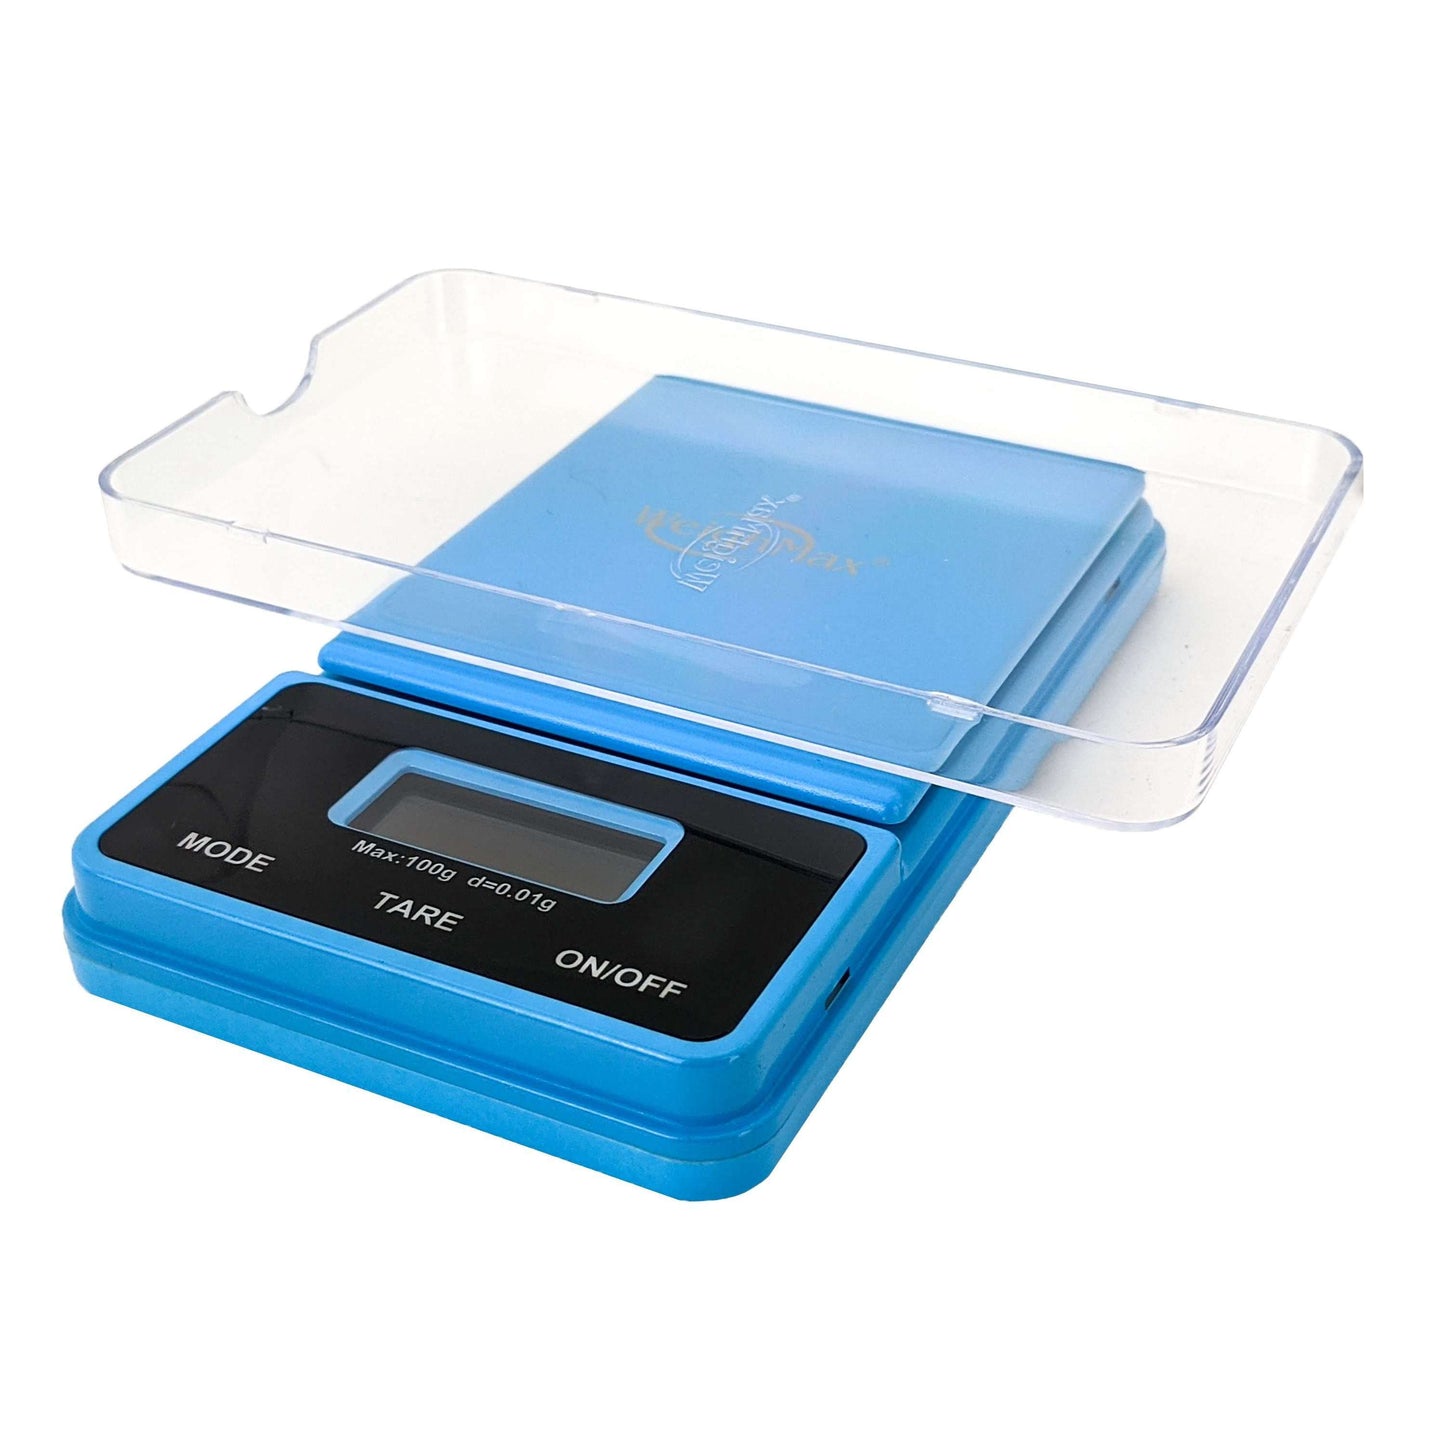 WeighMax Ninja Pocket Scale 100g x 0.01g NJ-100 - Blue